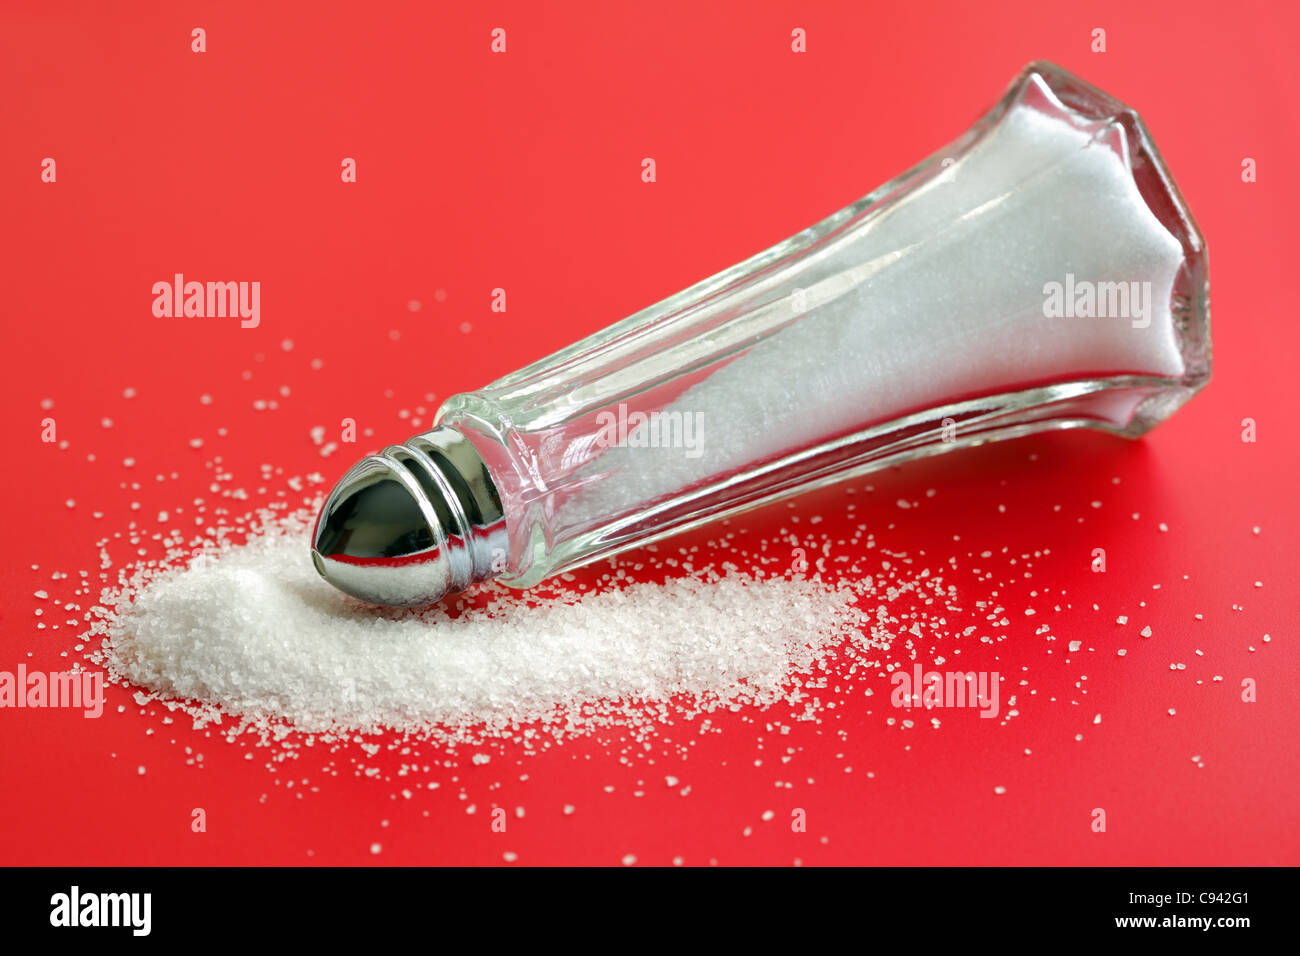 Spilled salt Stock Photo